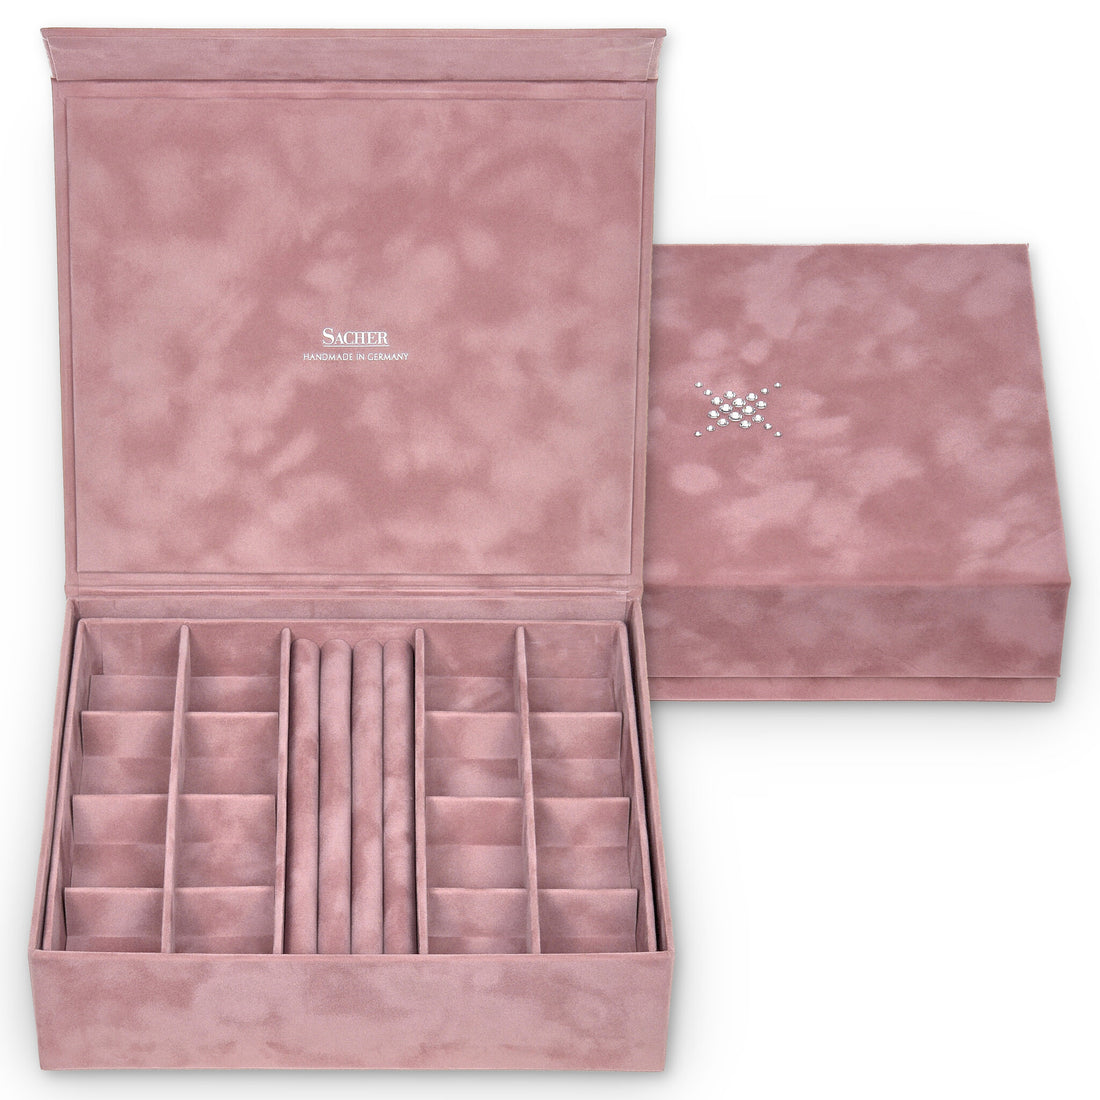 Schmuckbox Nora crystalo / alt rosé 1846 Offizieller Store – | SACHER Manufaktur